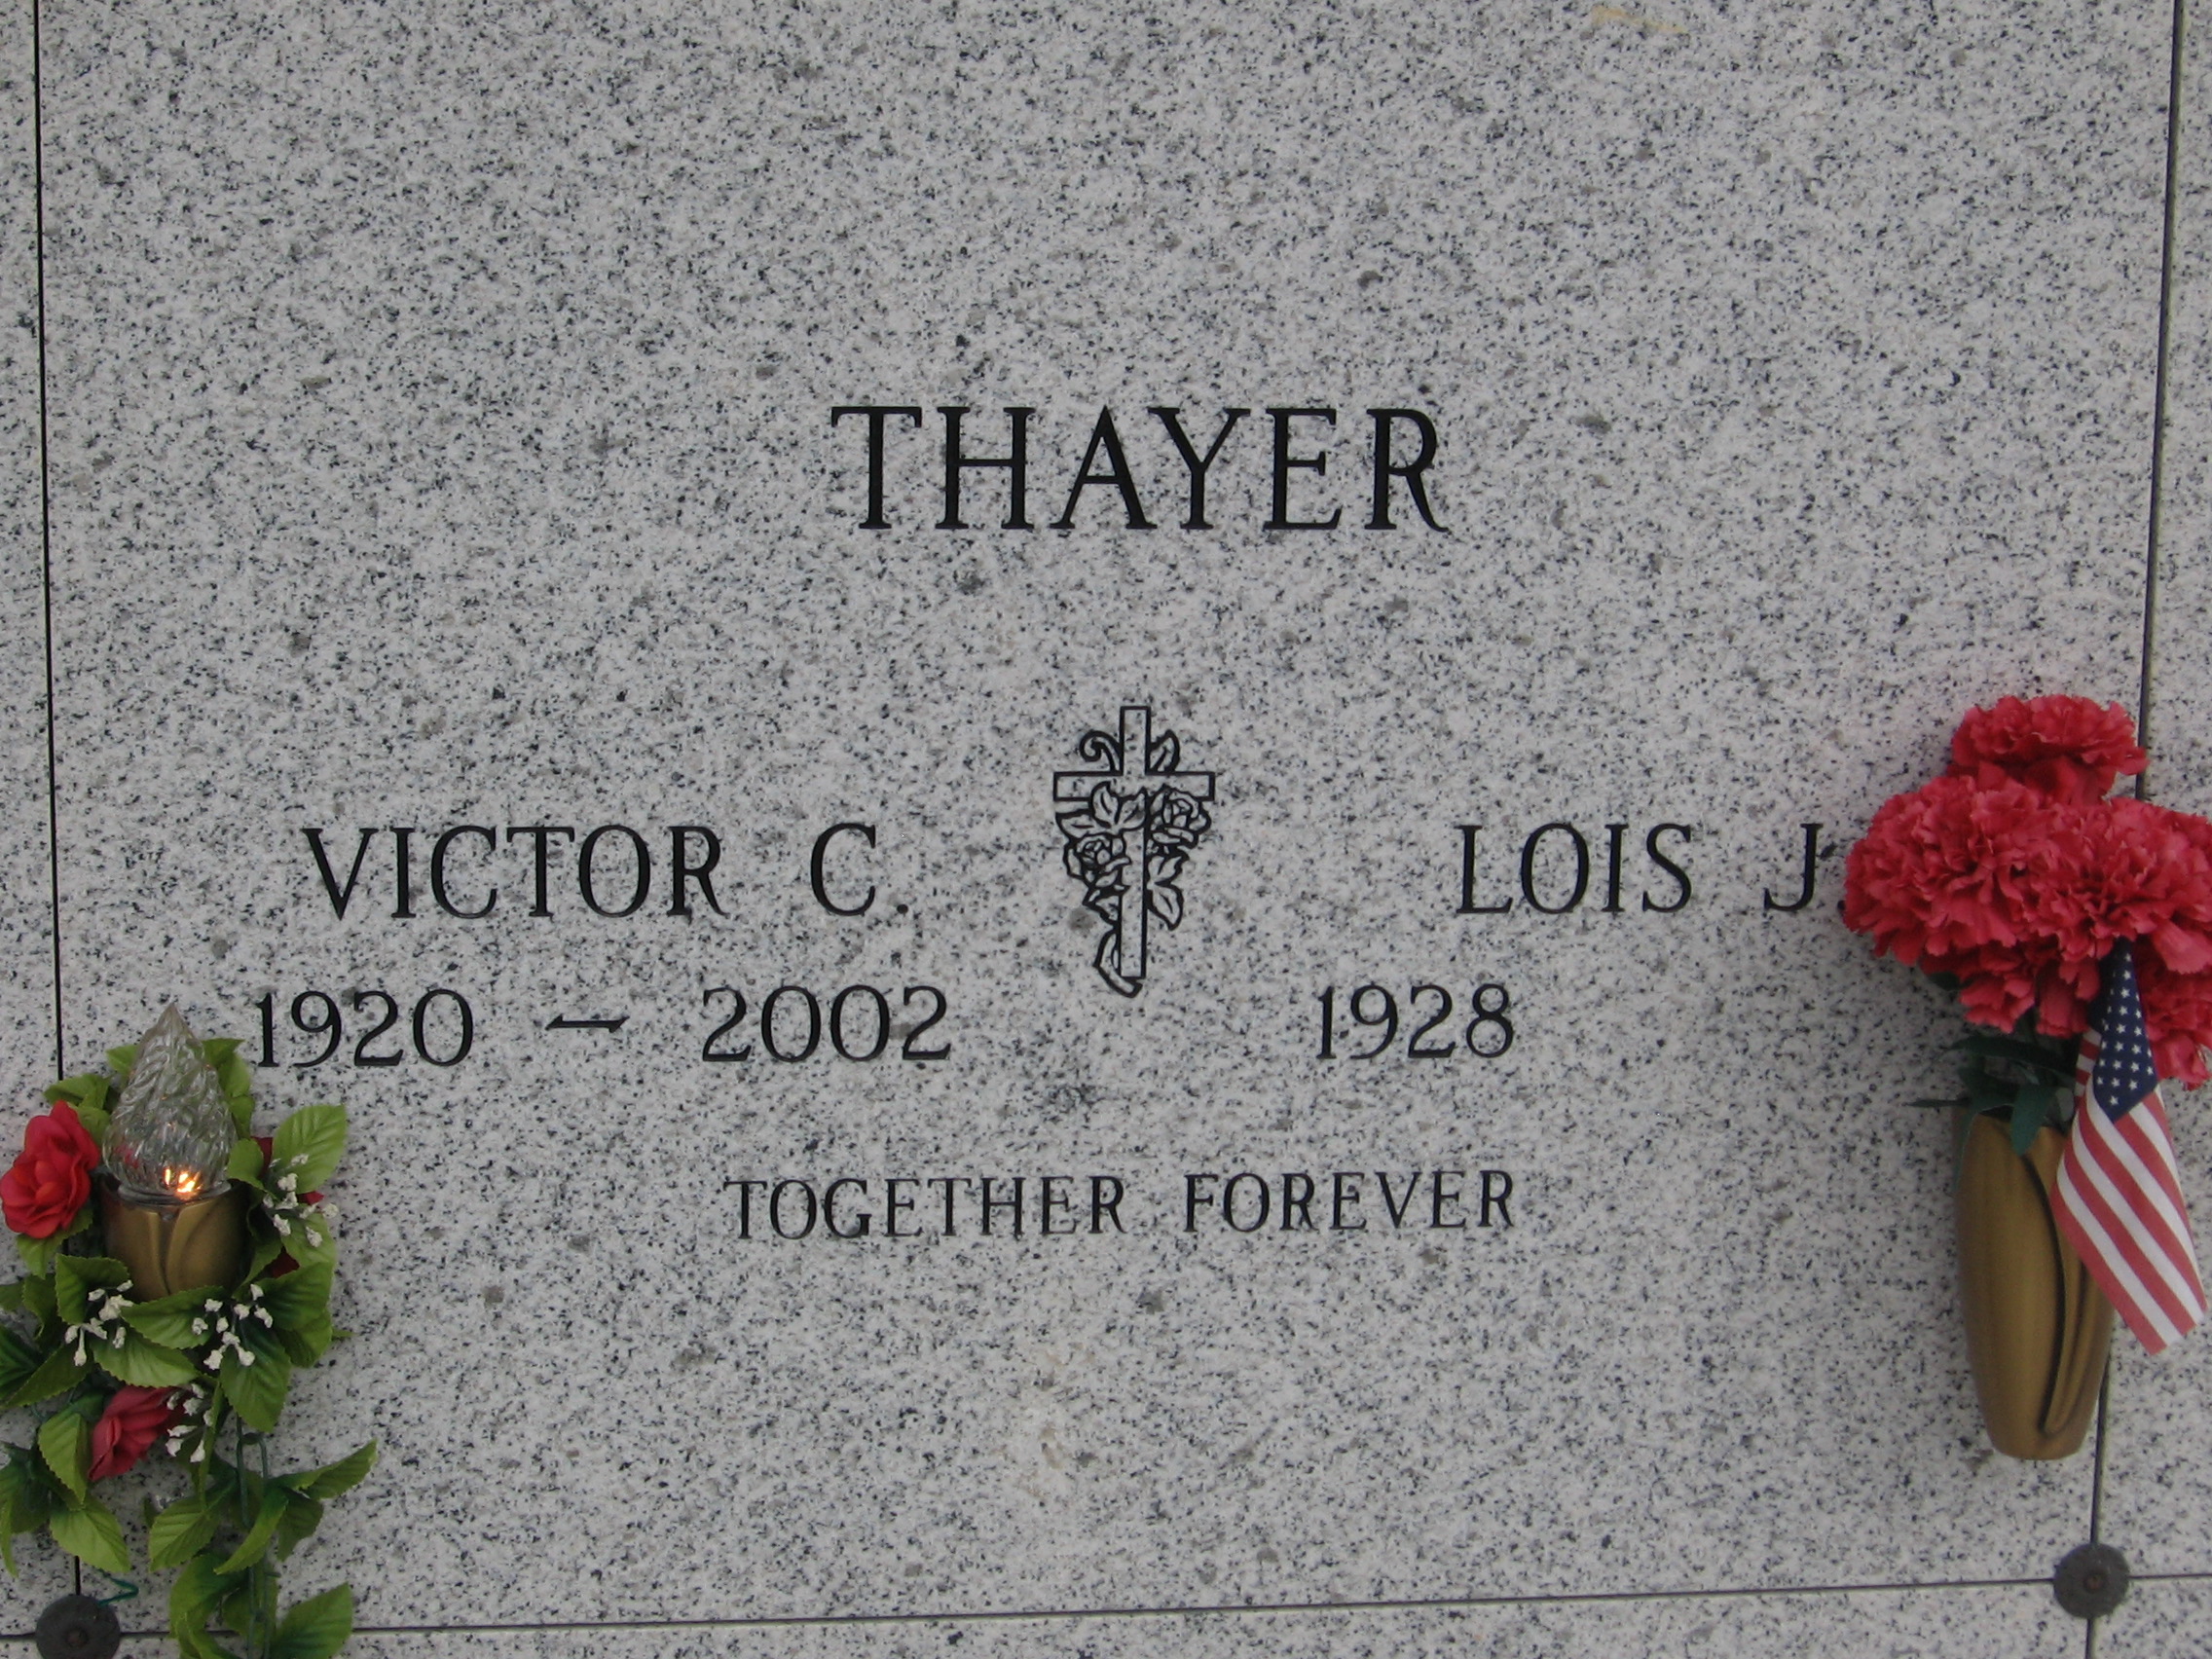 Lois J Thayer